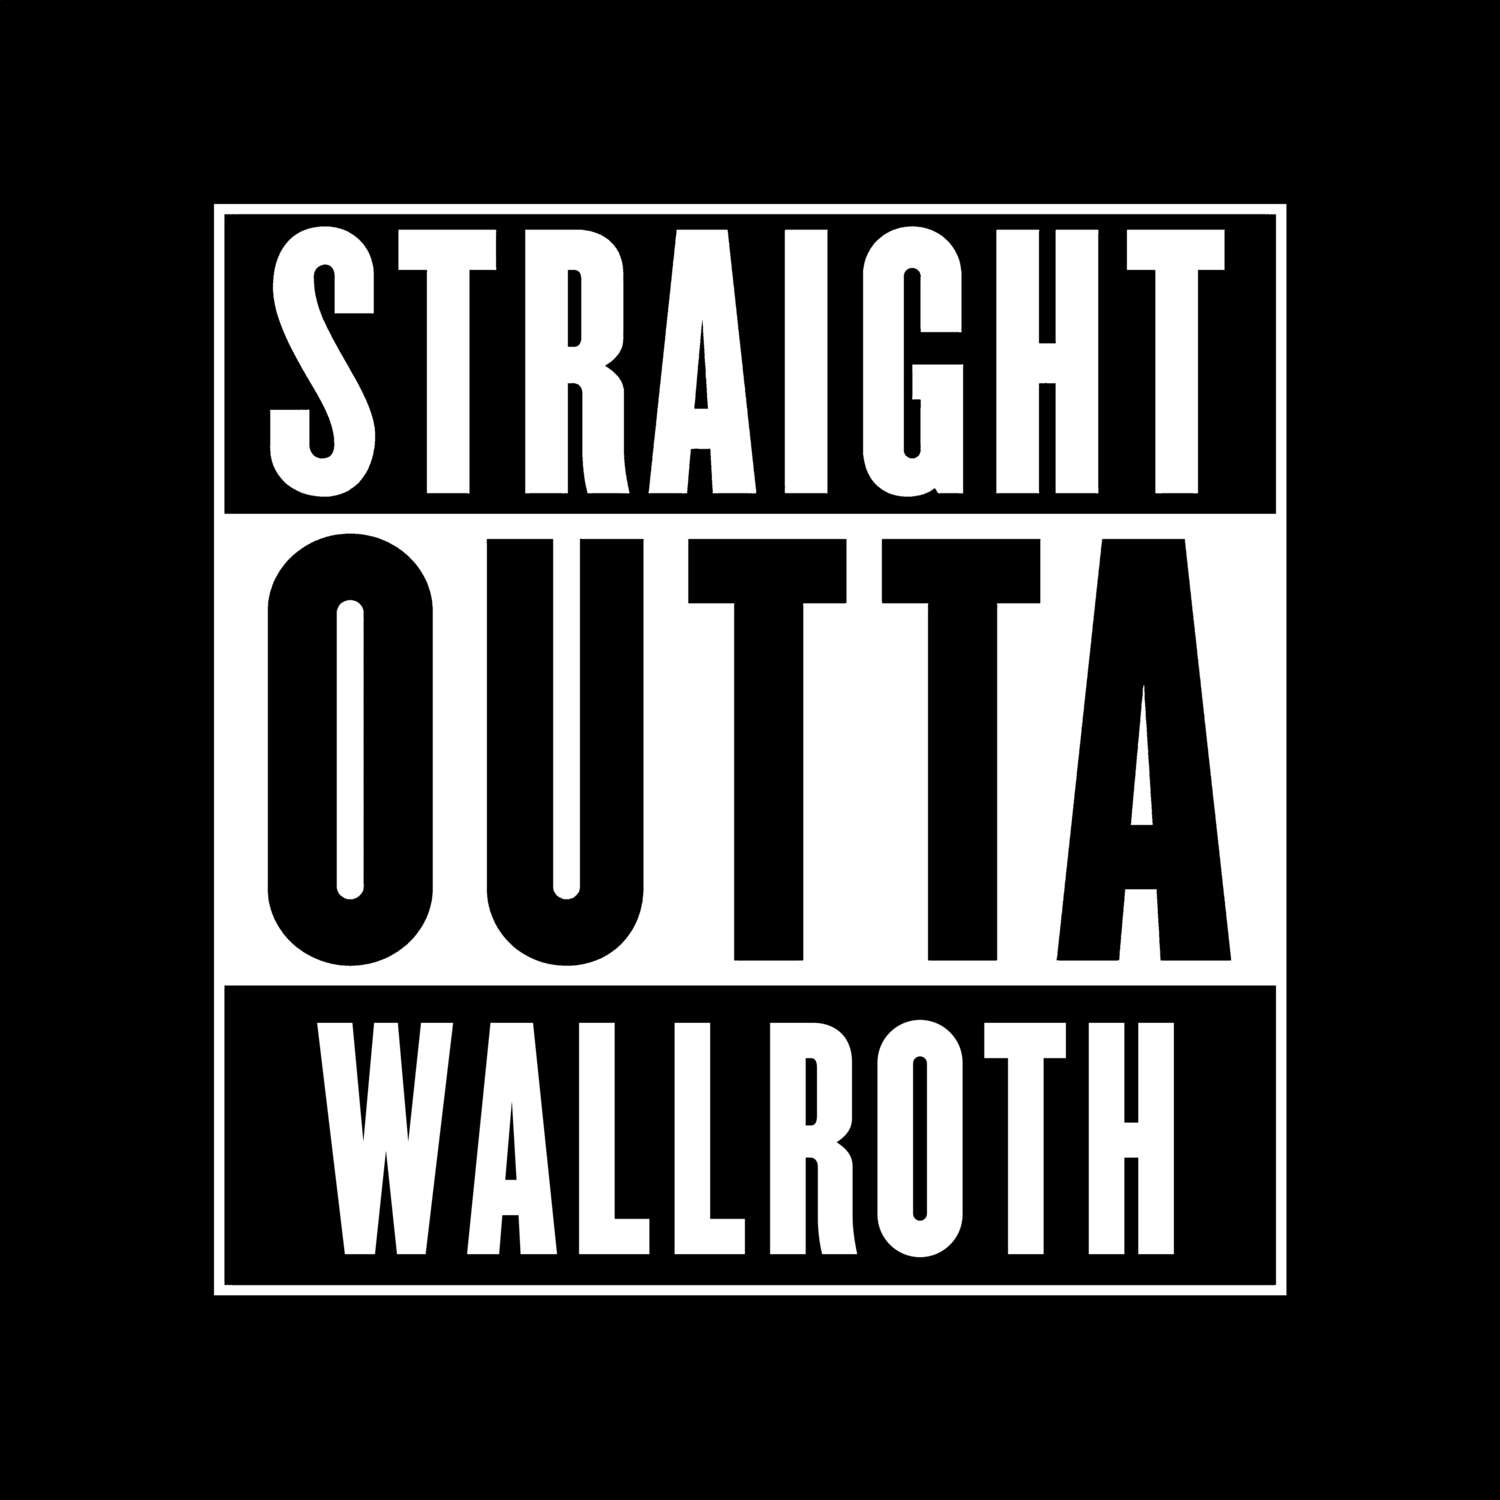 Wallroth T-Shirt »Straight Outta«